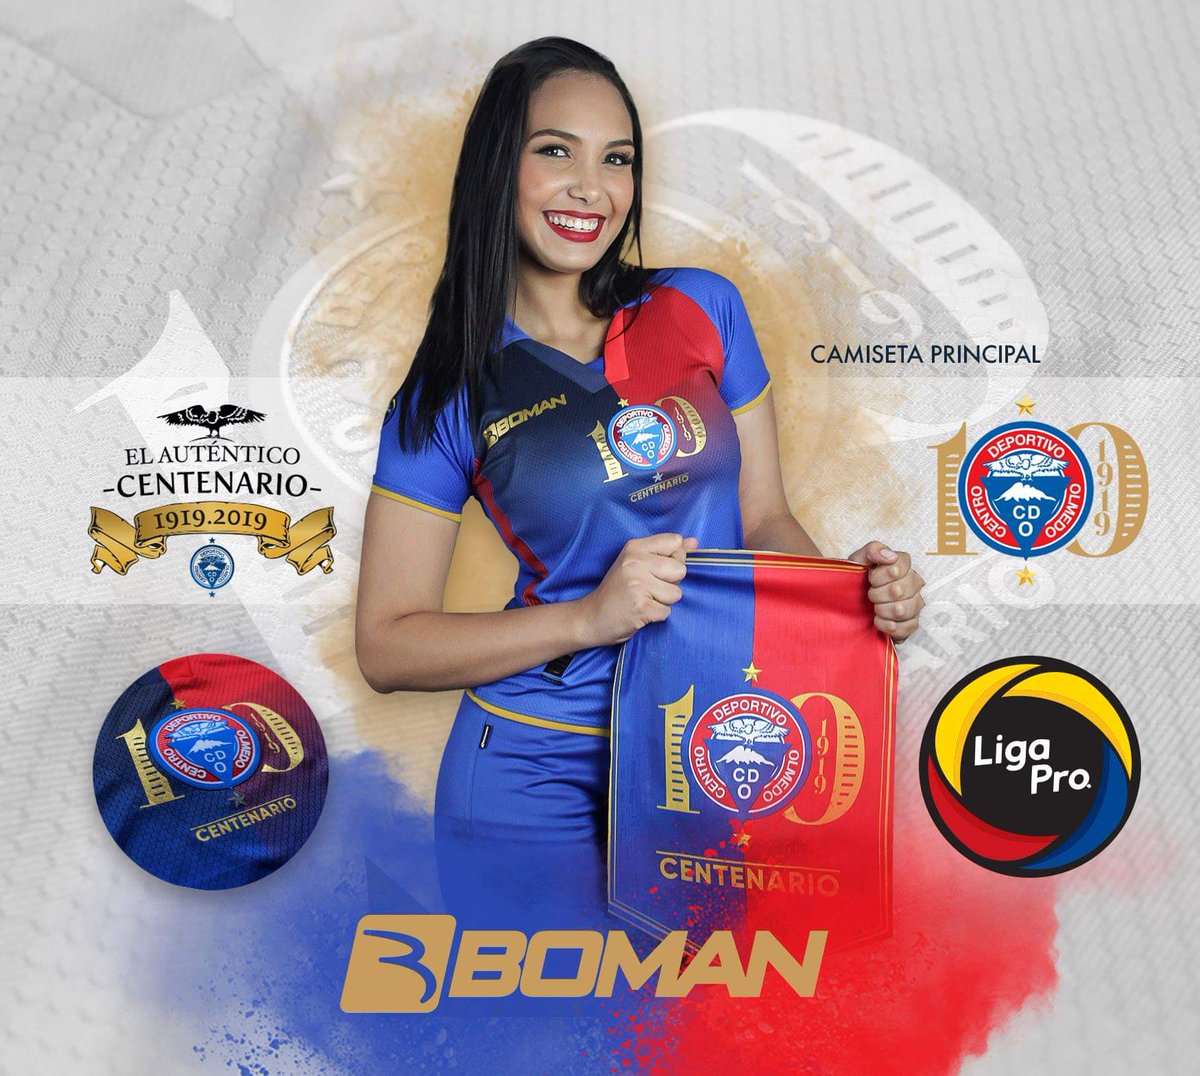 Camisetas Centenario Boman de CD Olmedo 2019